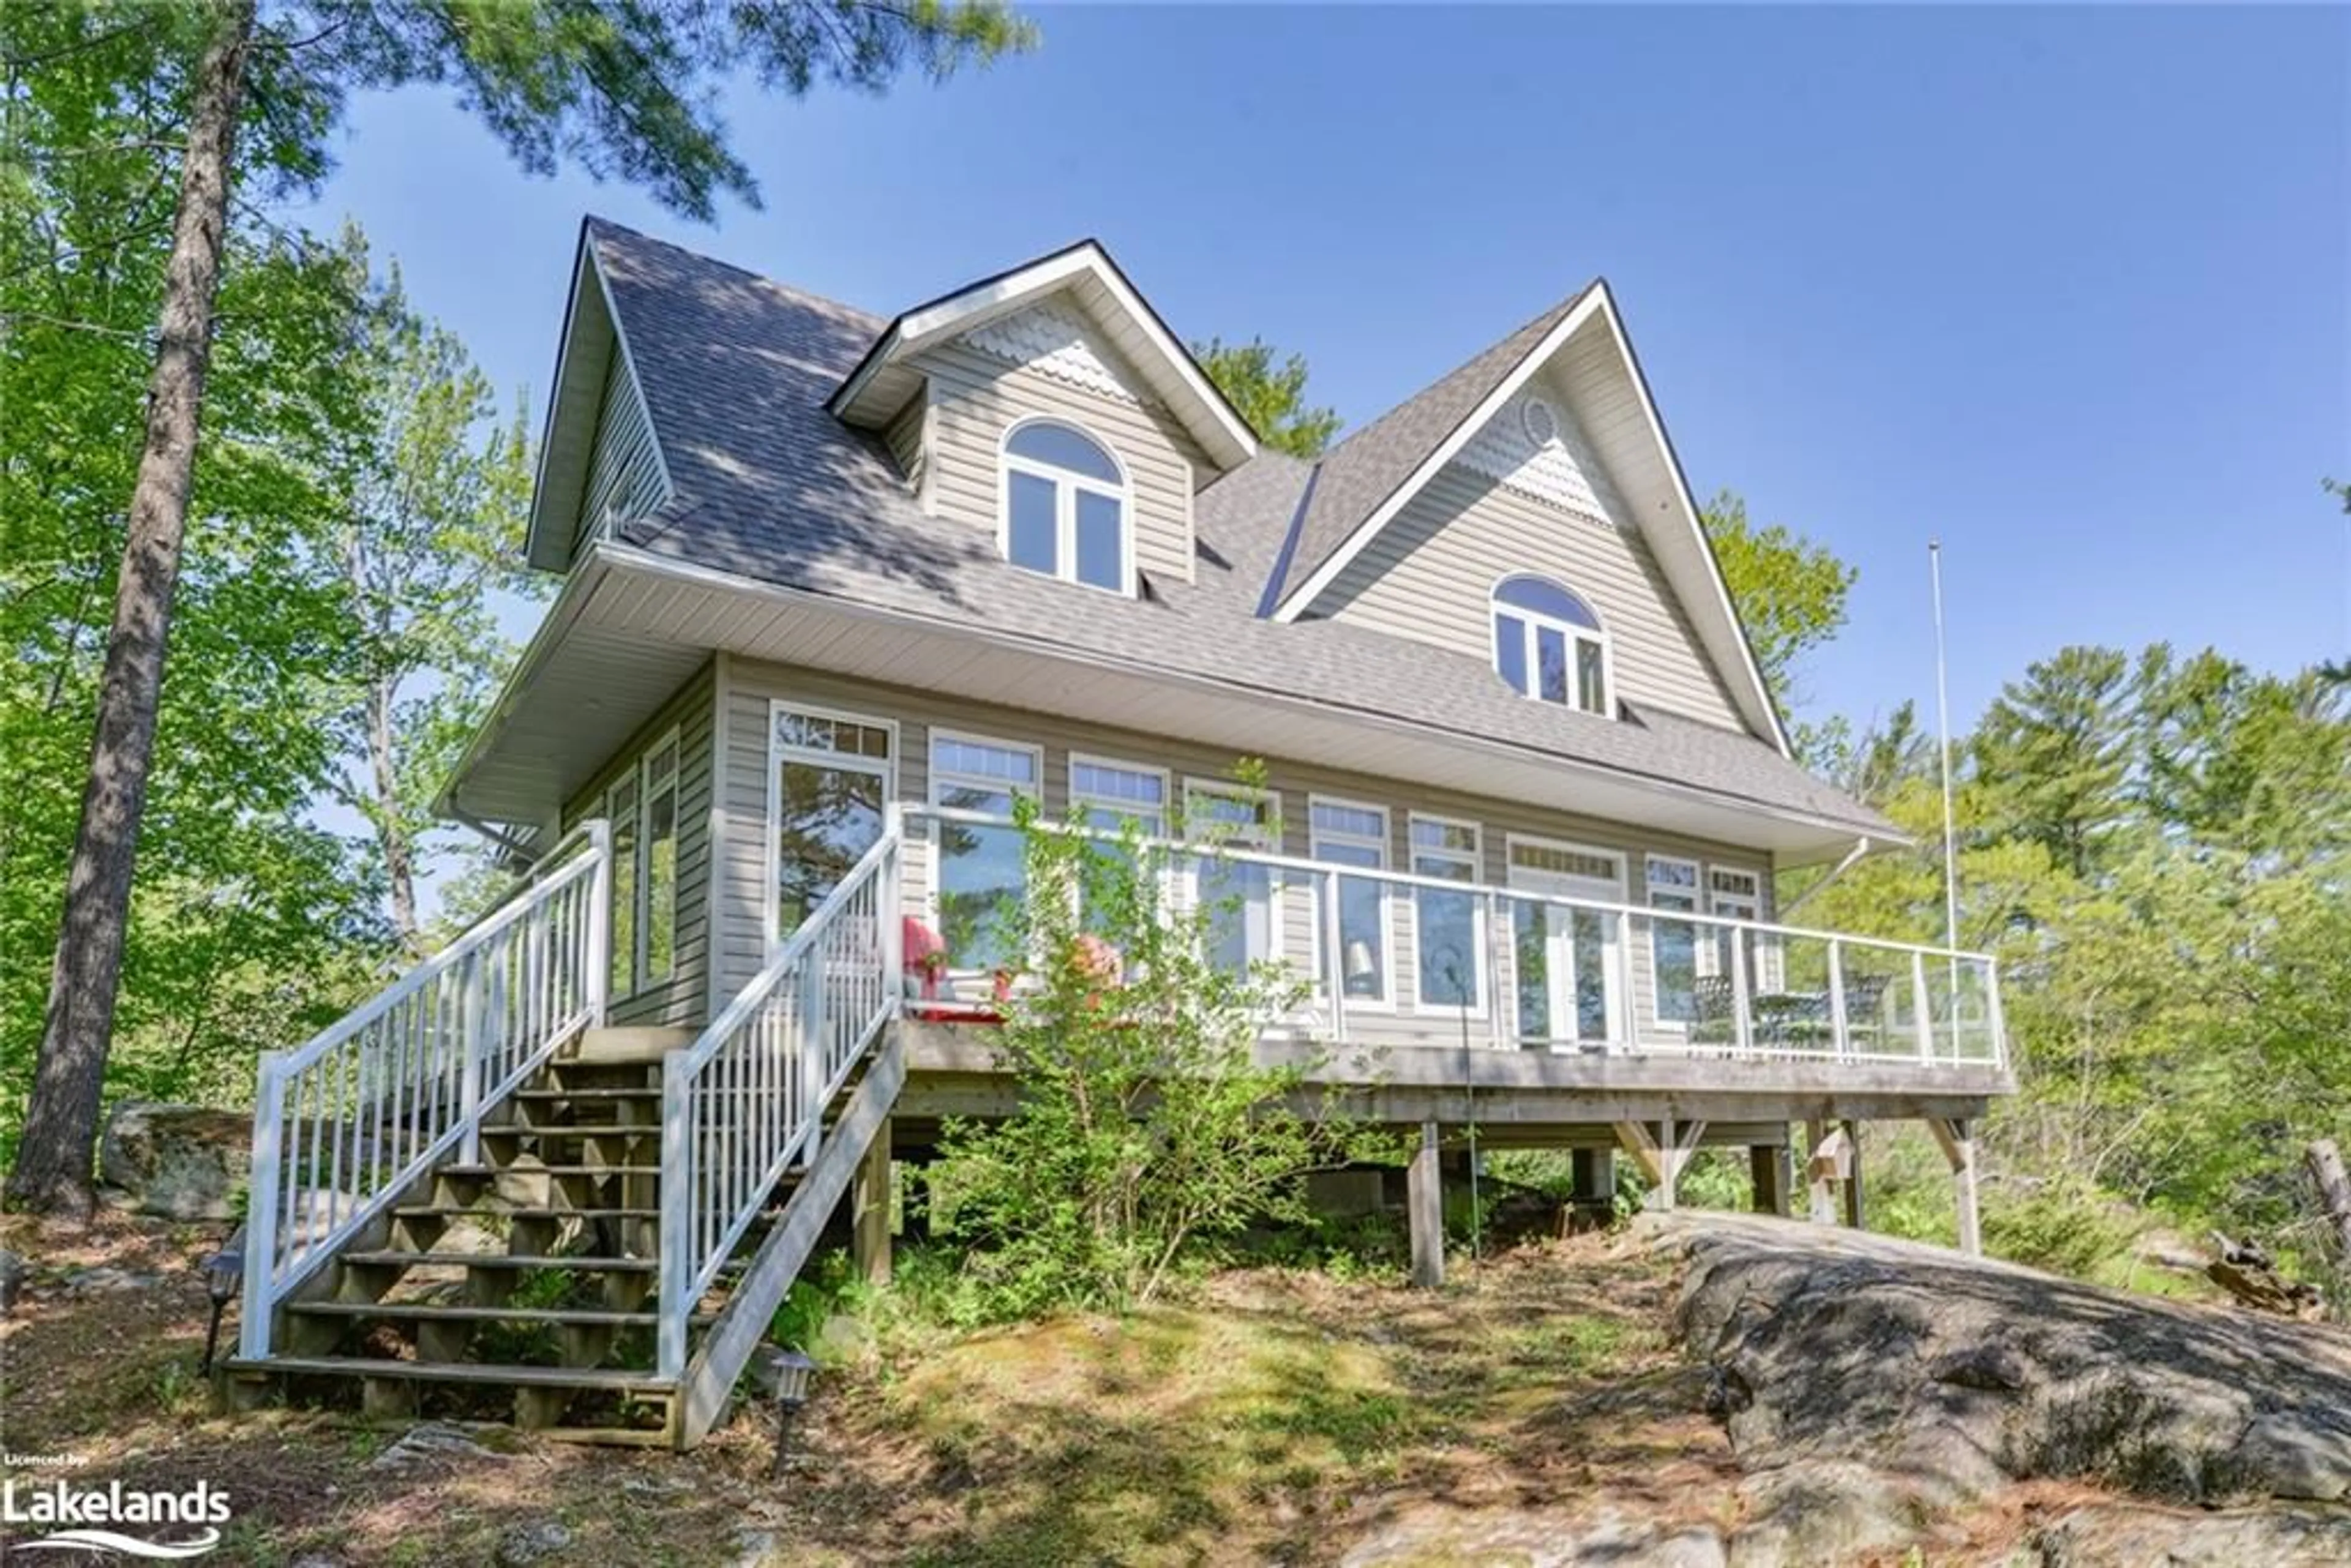 Cottage for 1320 360 Island, Port Severn Ontario L0K 1S0